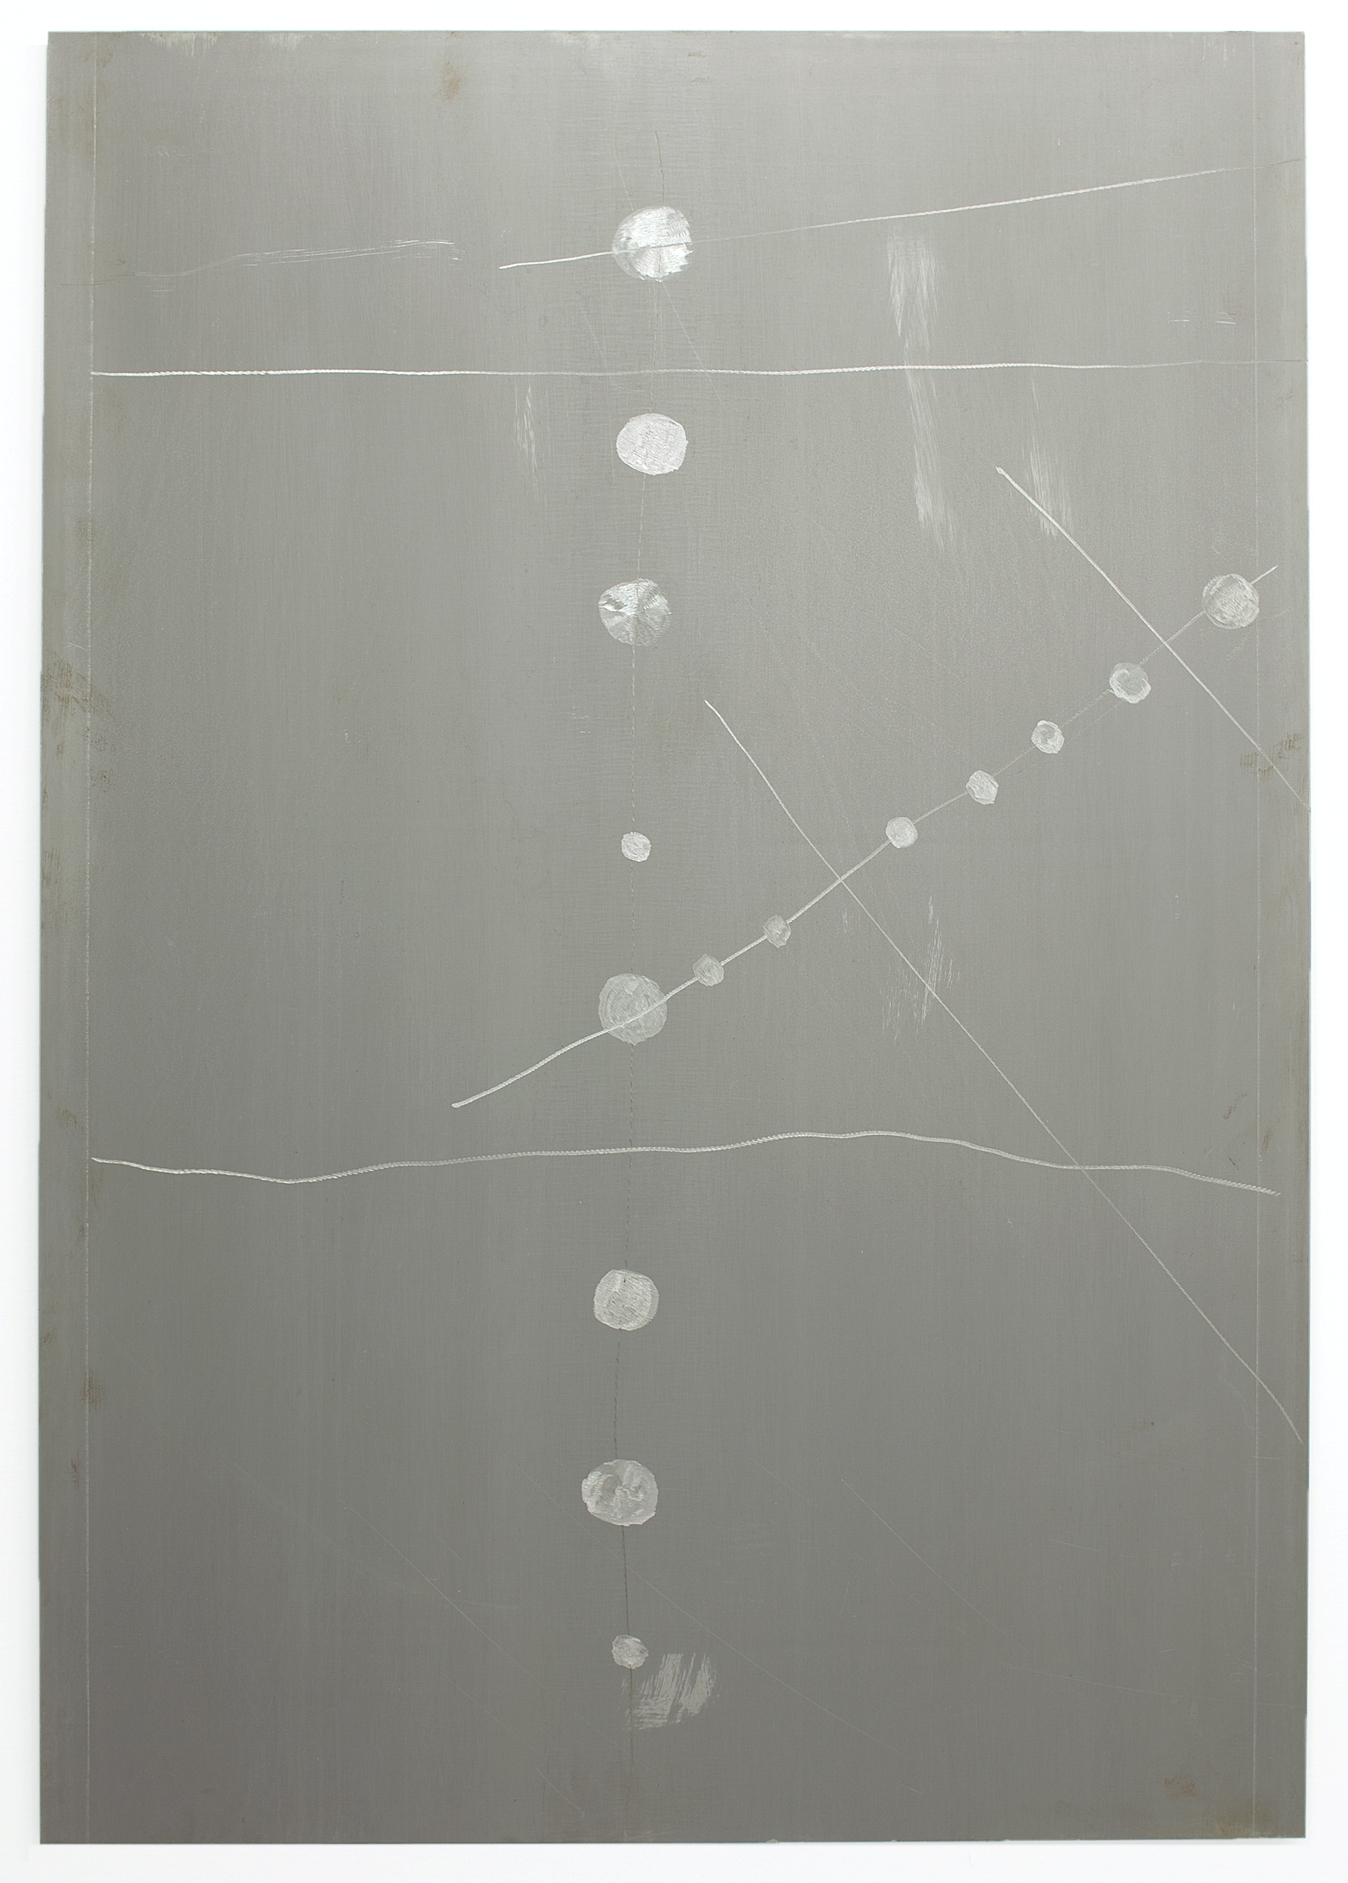 Hans-Peter Thomas aka Bara, Untitled, 2007, Steel plate, Steel etching, 140 x 100 cm